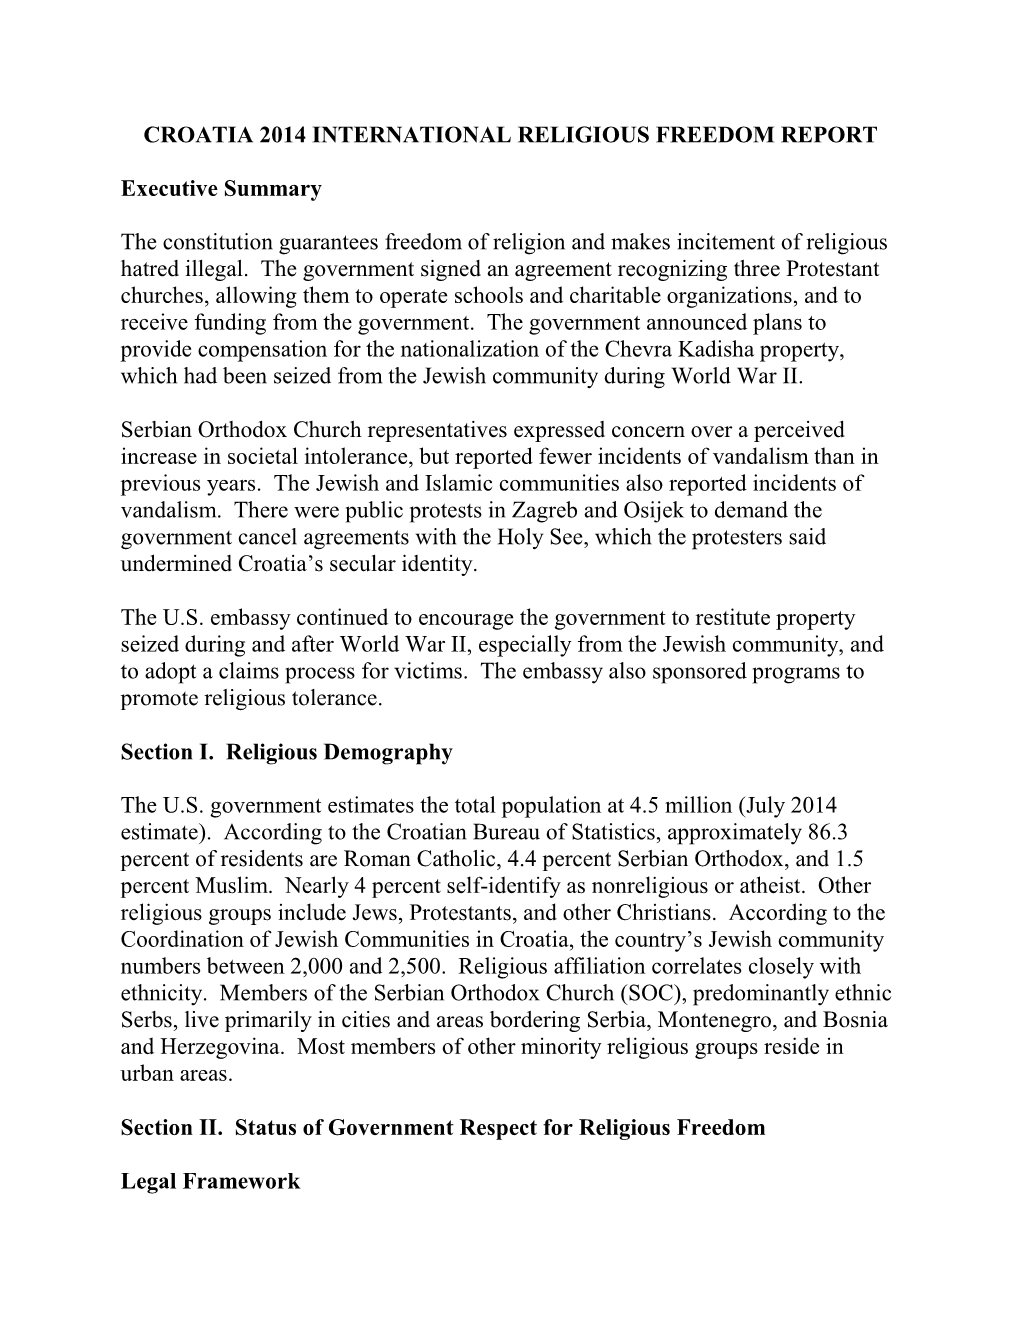 Croatia 2014 International Religious Freedom Report